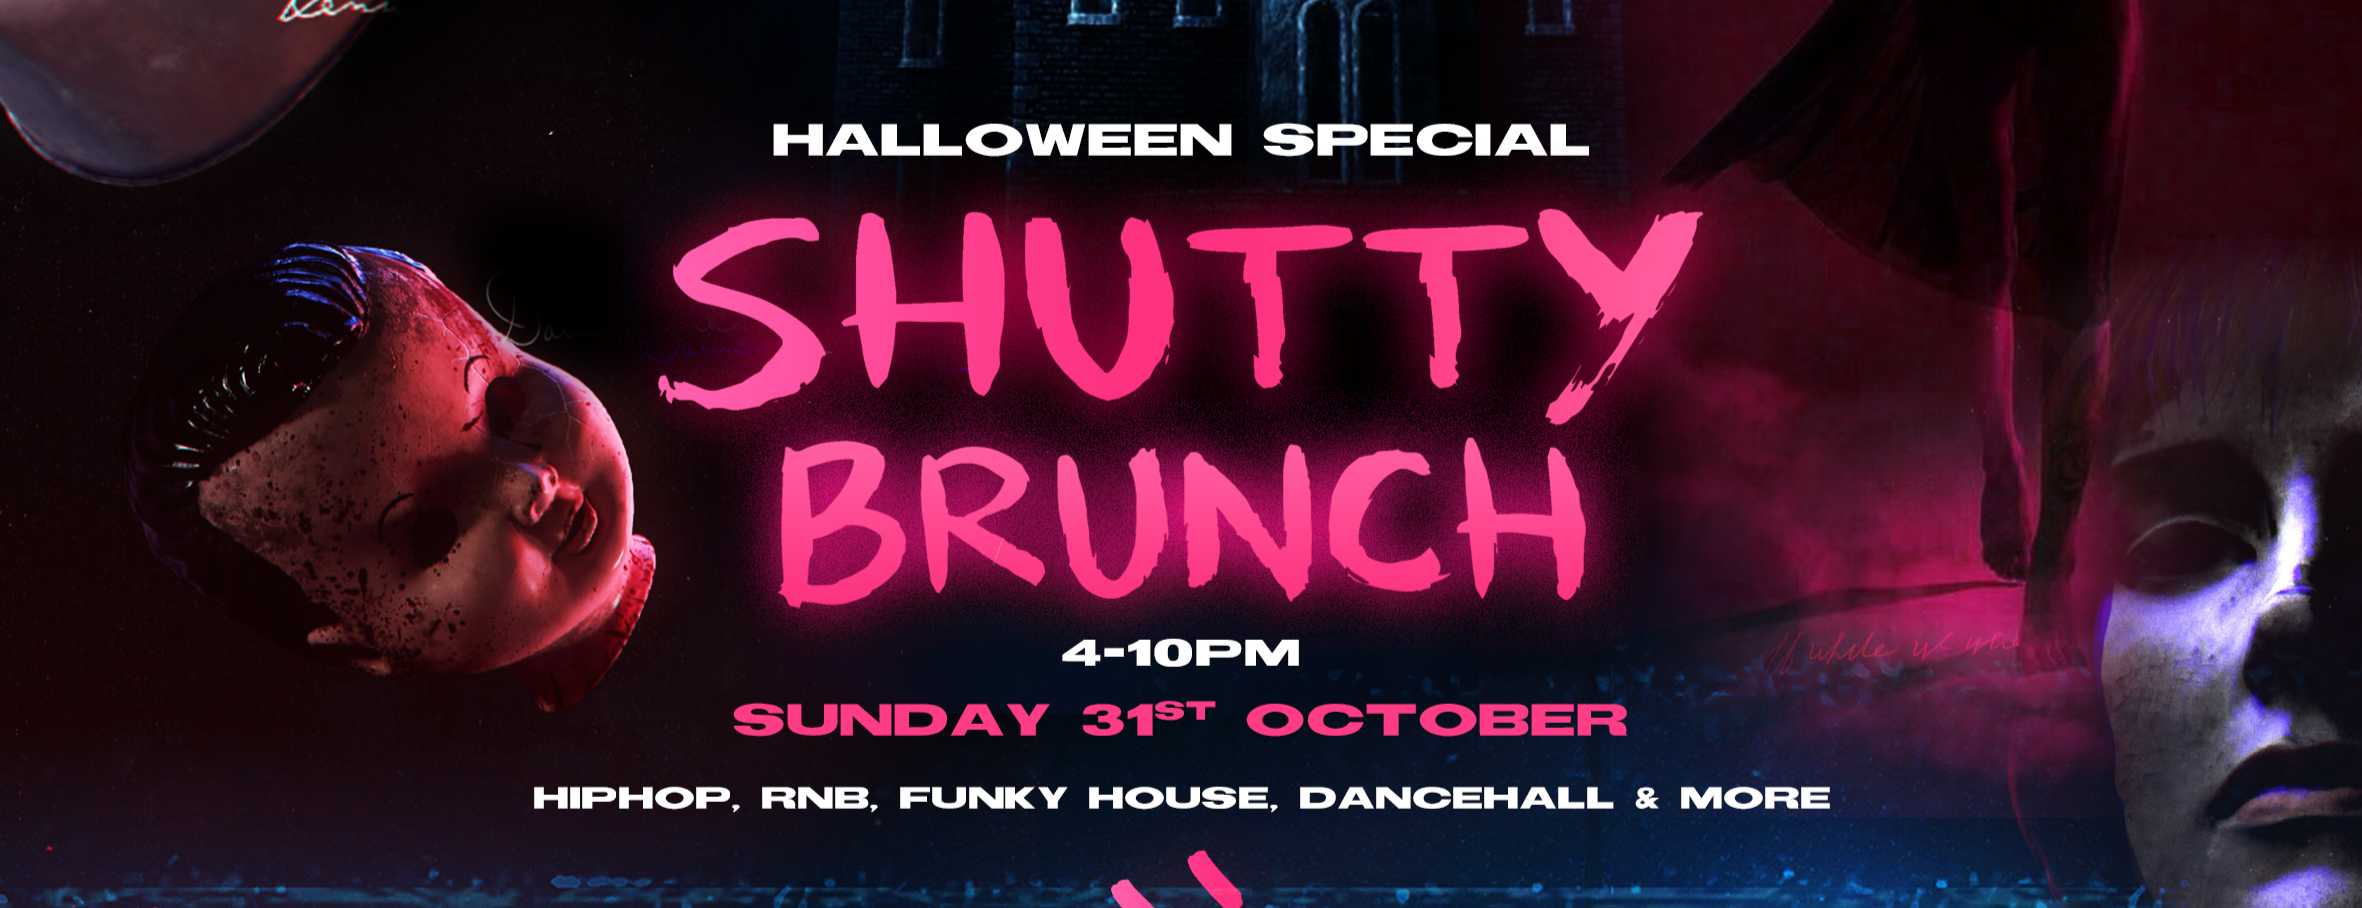 JAMSKIIDJ Presents Halloween SHUTTYBRUNCH - 31st October 2021 @ 202, Manchester